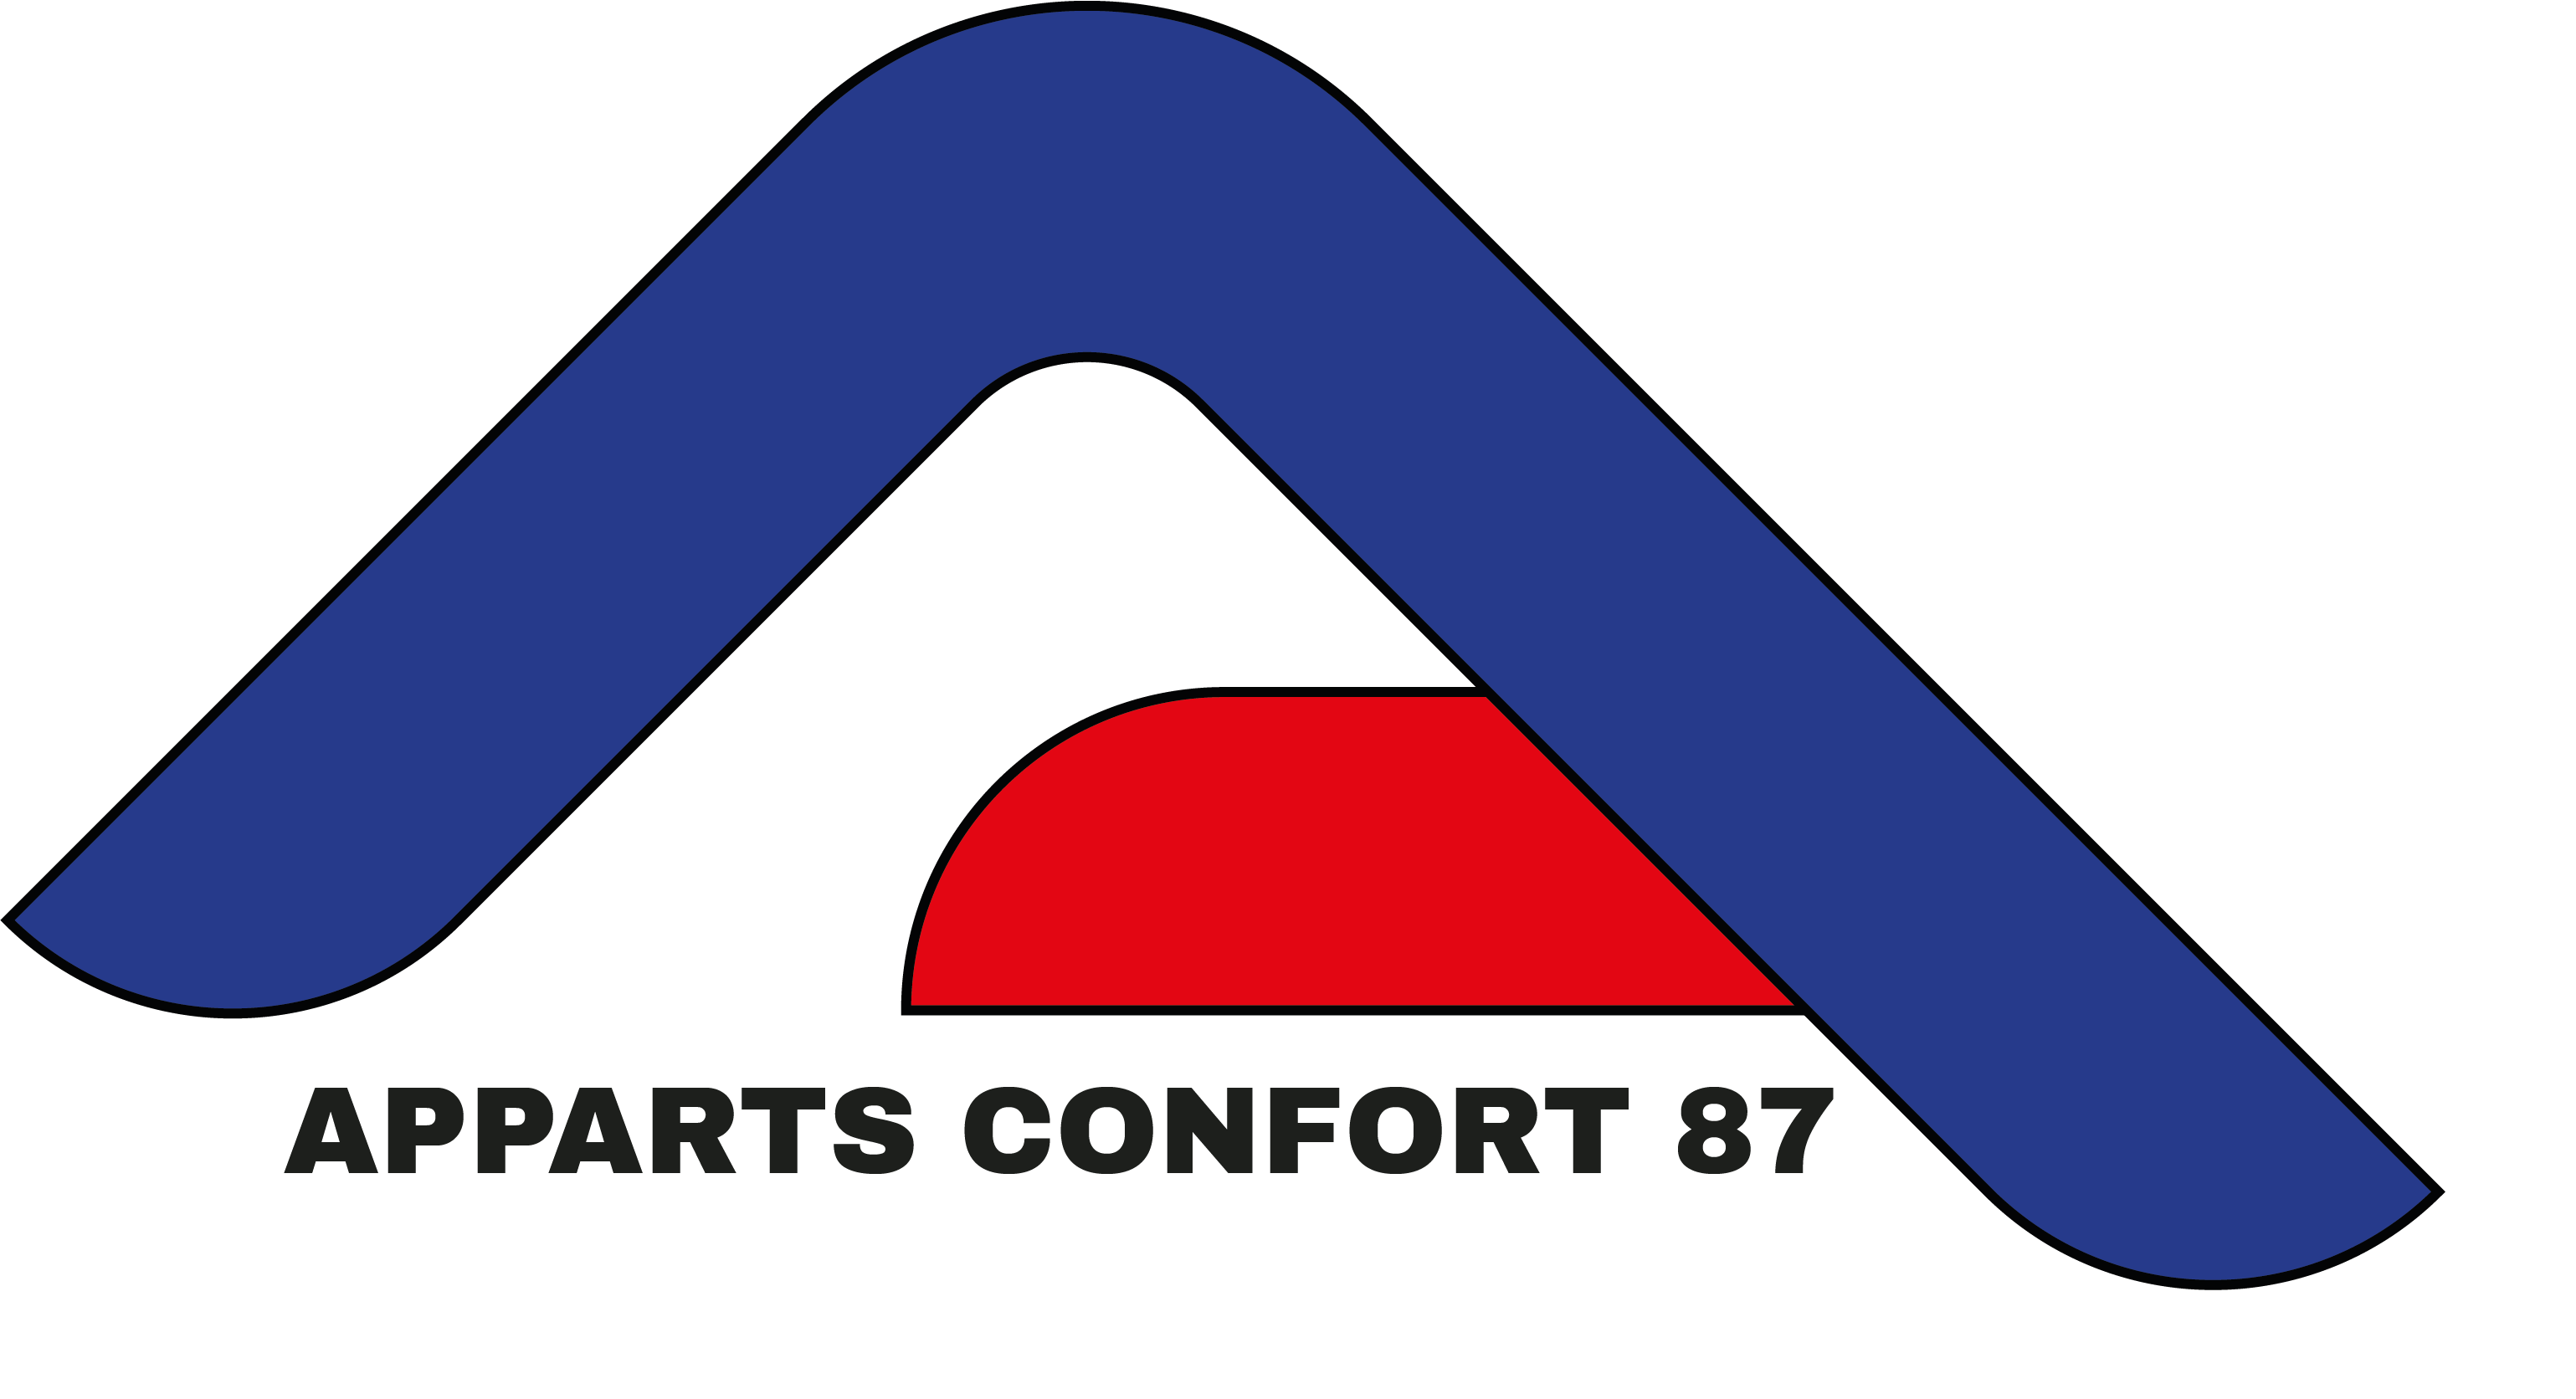 Apparts confort 87